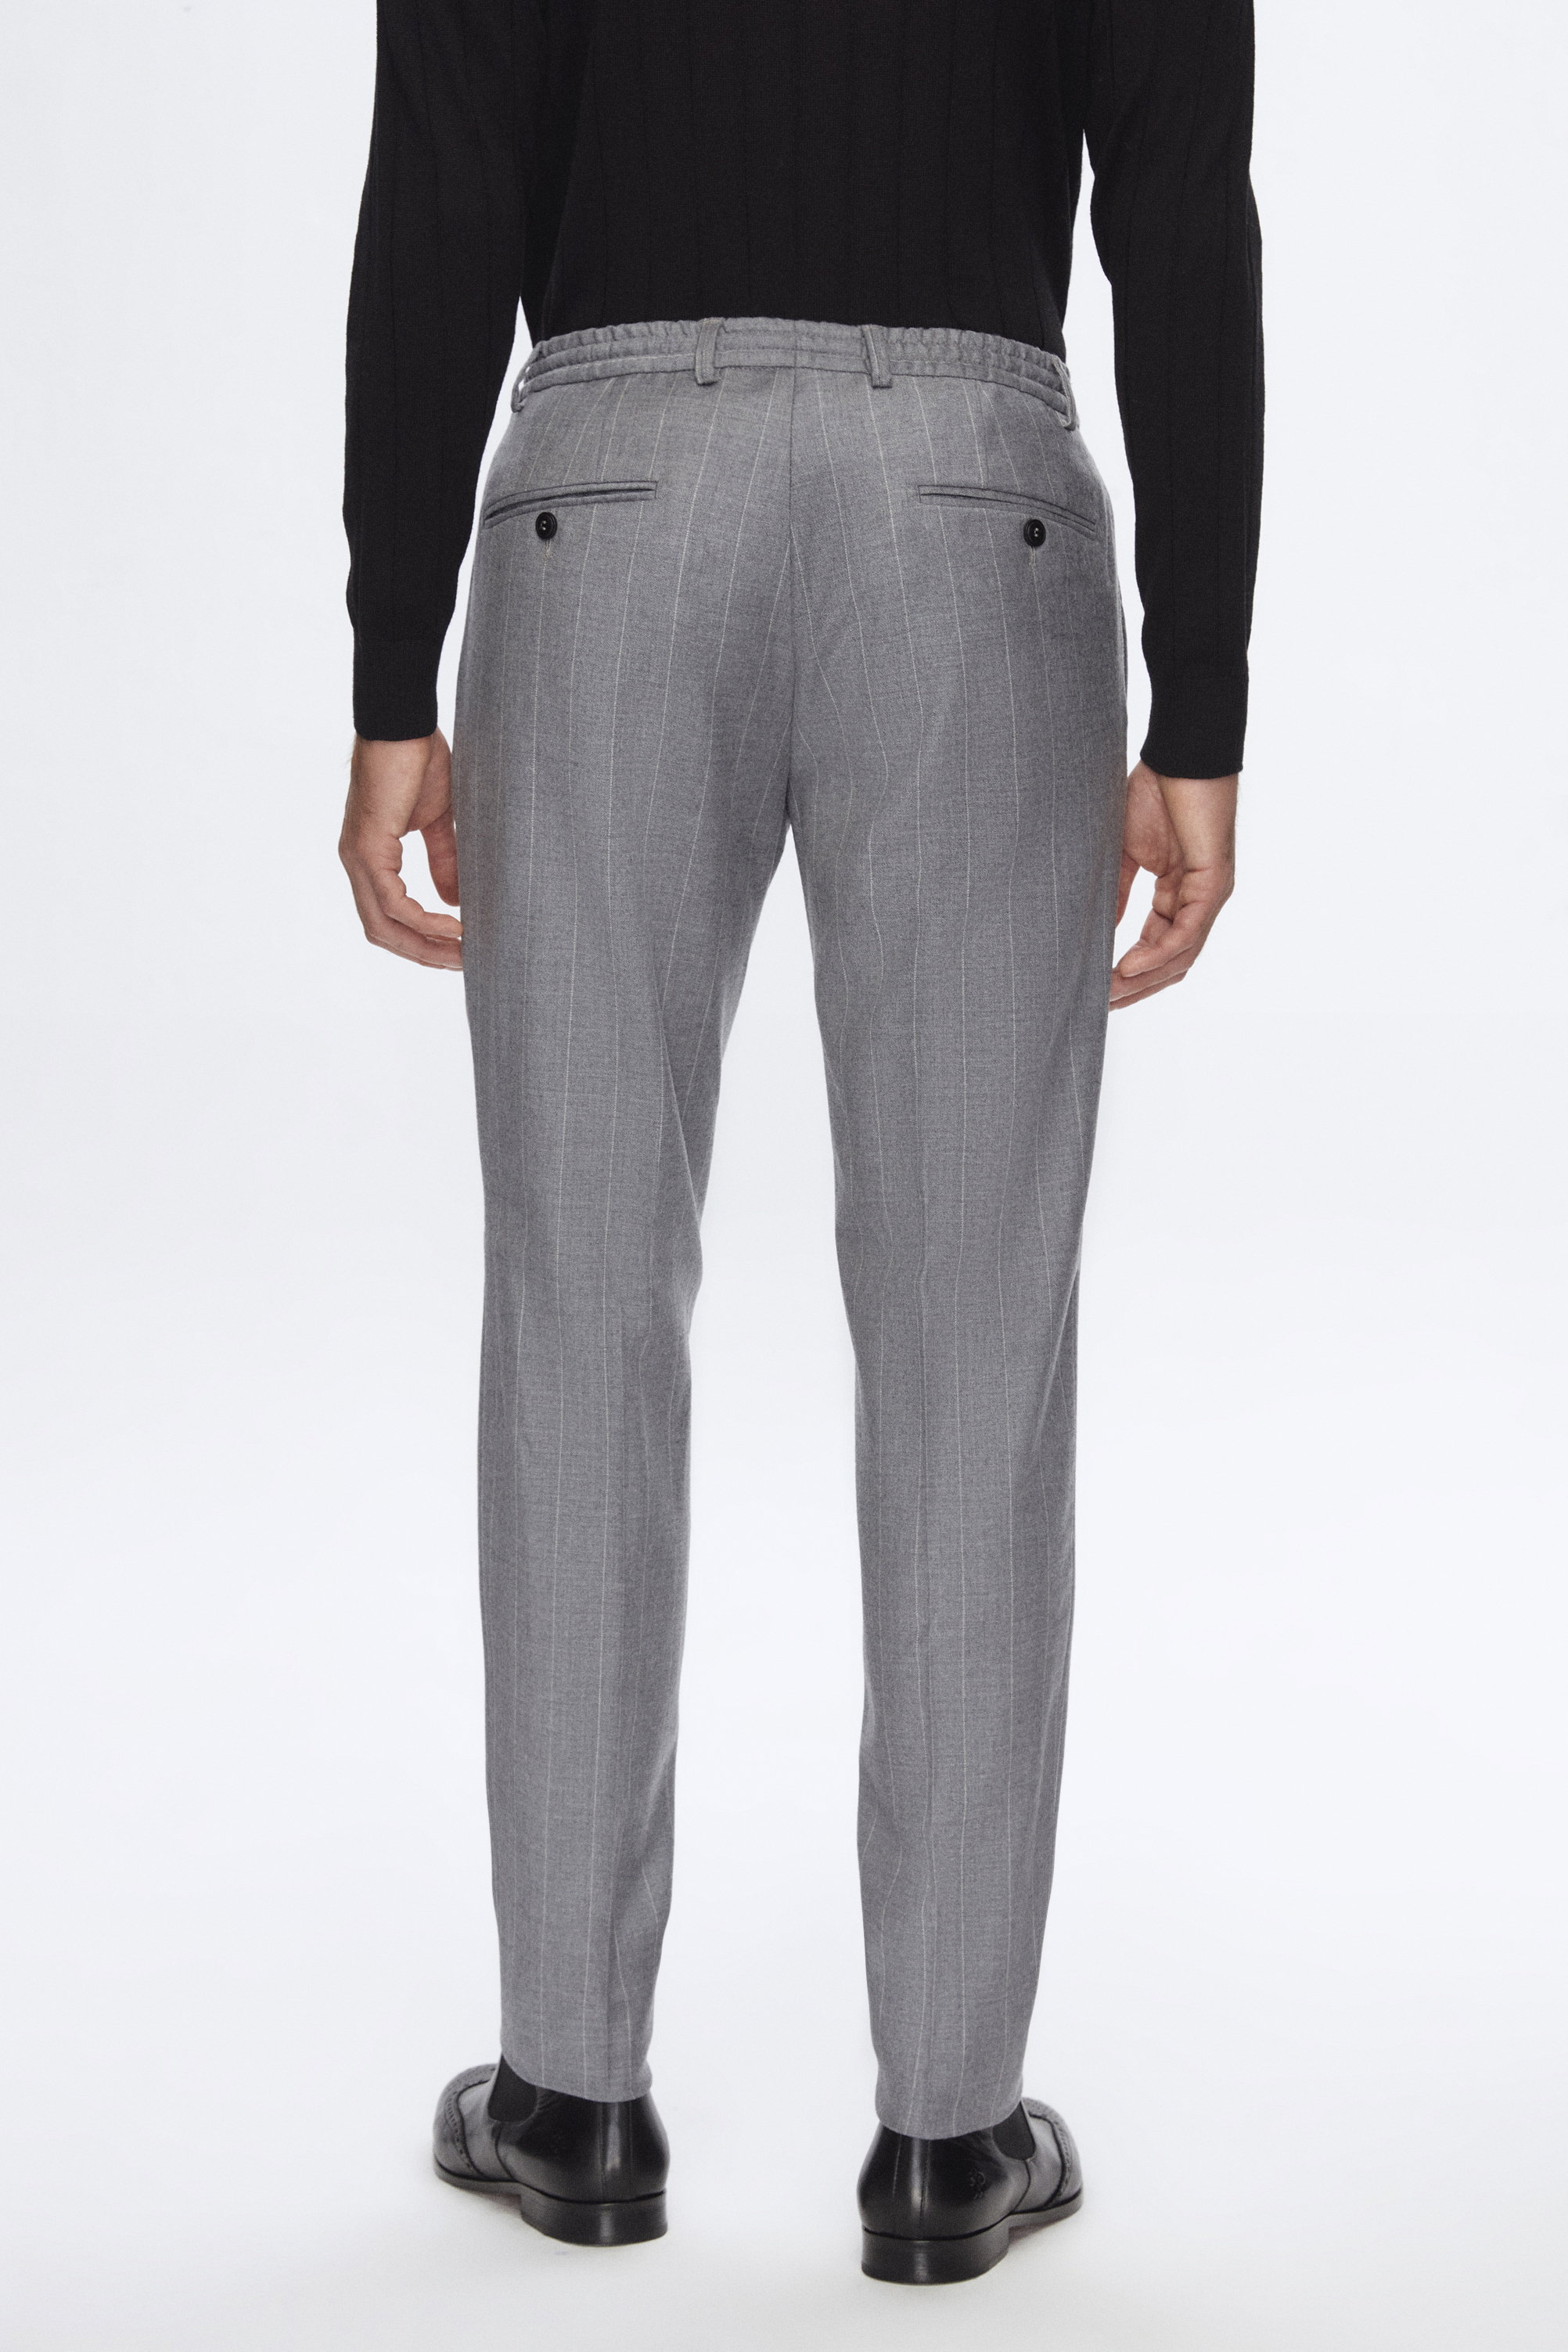 Damat Tween Damat Regular Fit Gri %100 Yün Chino Pantolon. 5